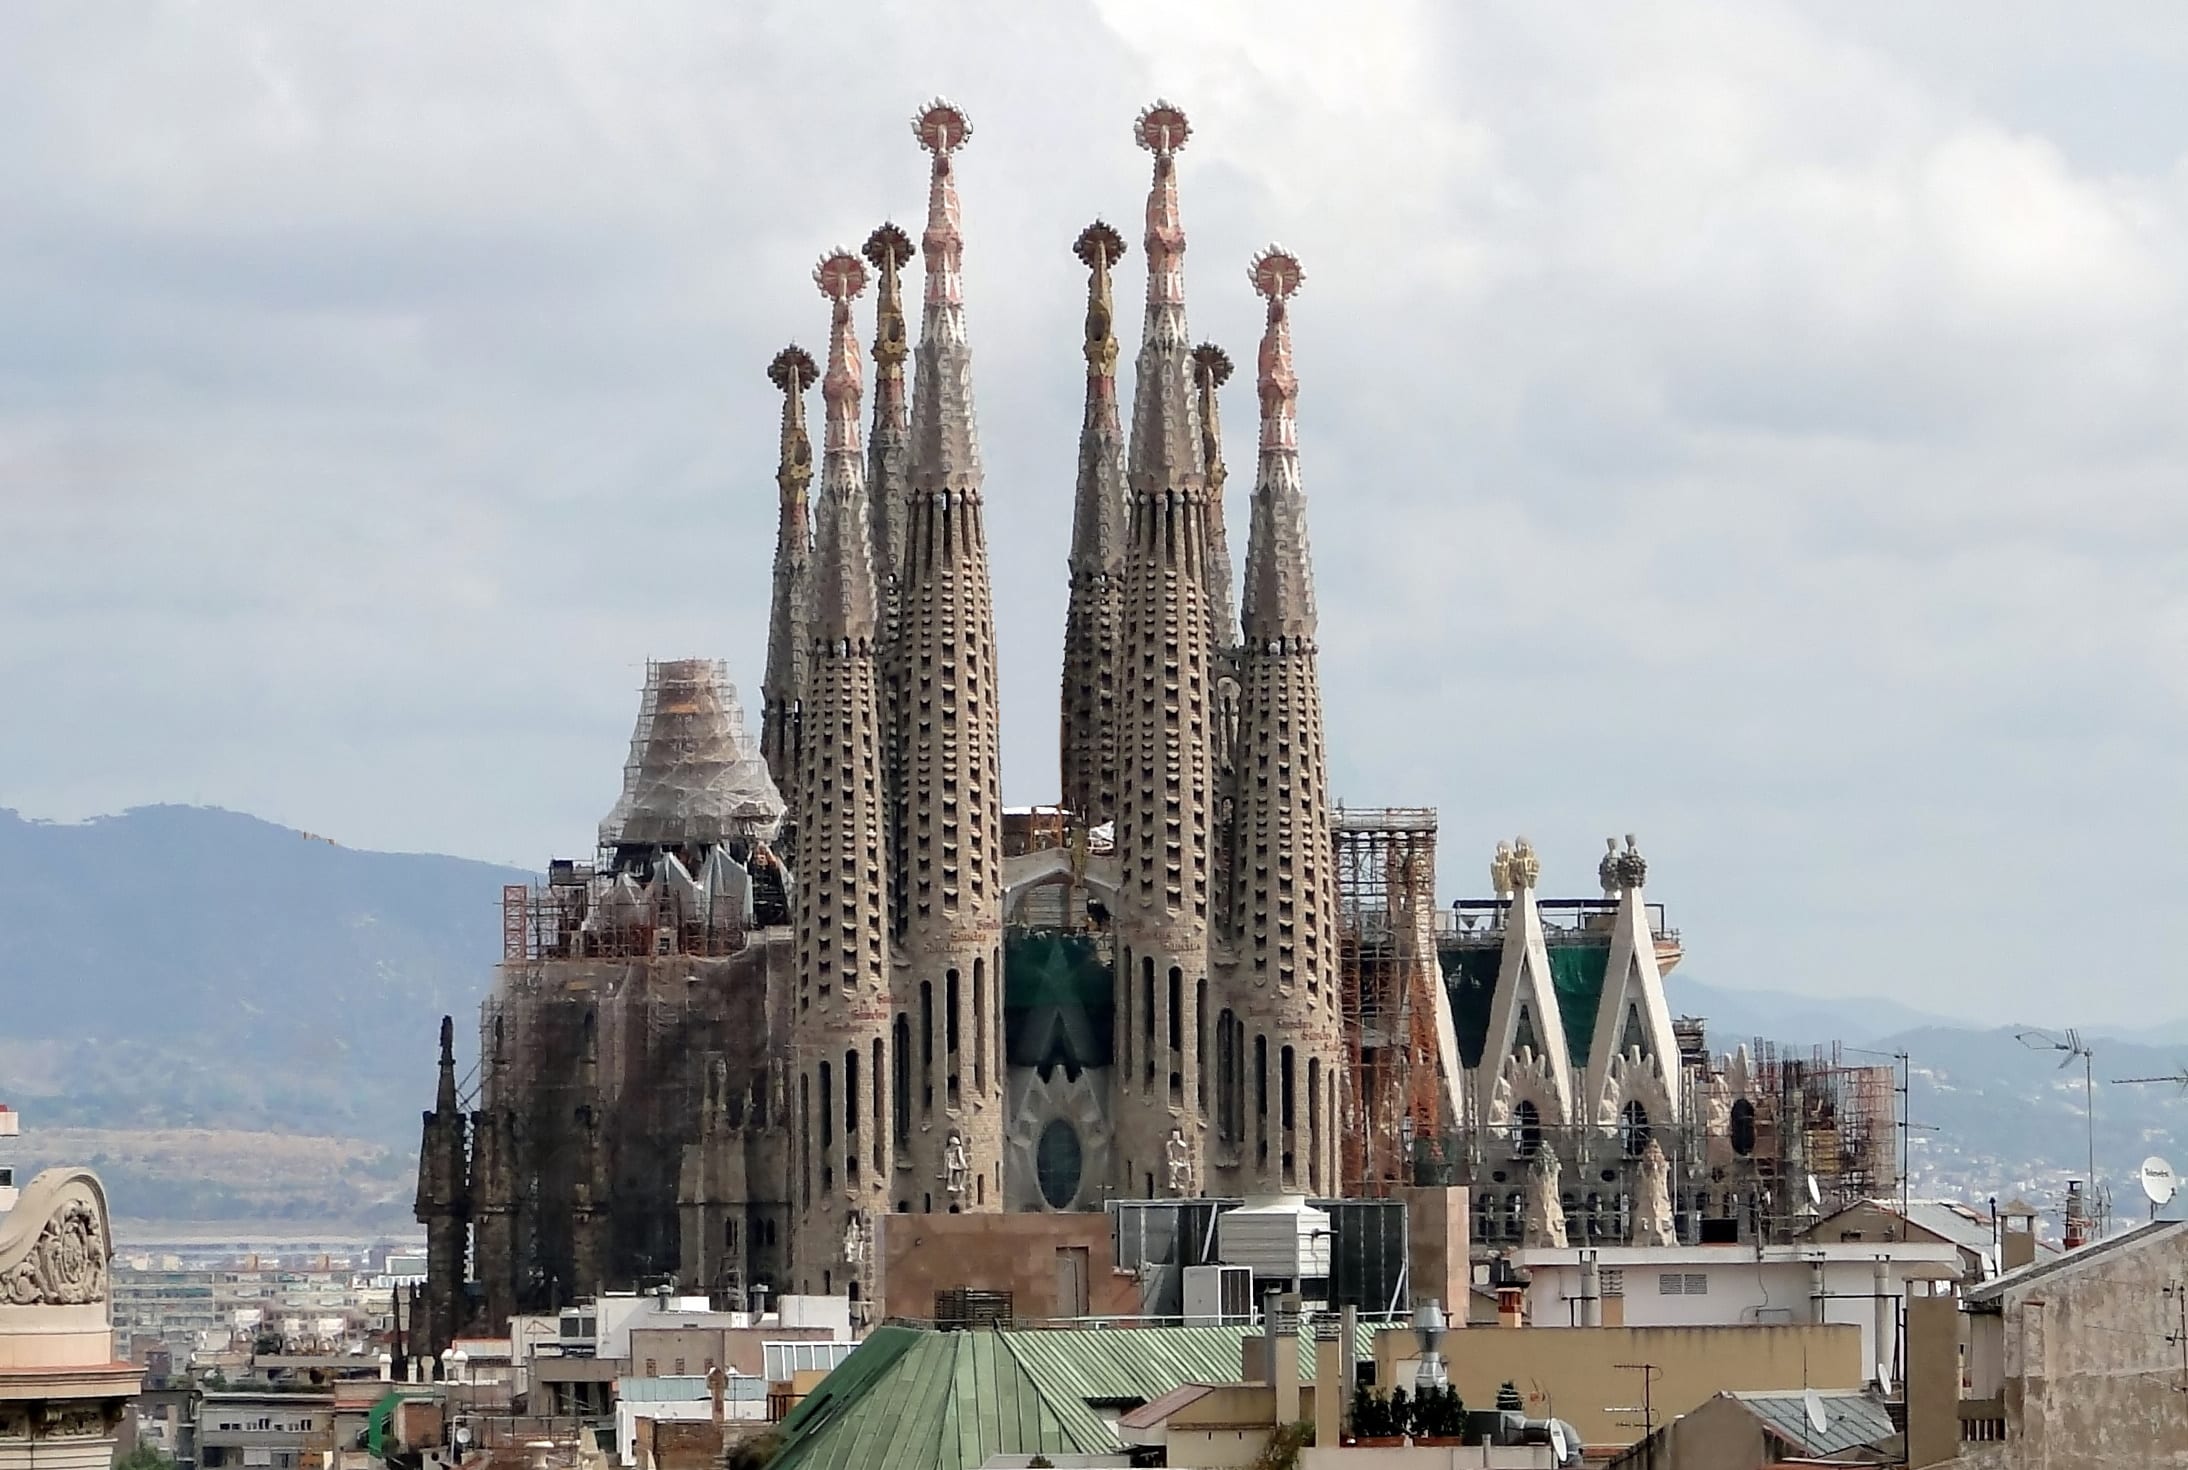 Von den 18 Türmen der Sagrada Familia sind erst acht fertig. Bildquelle: Bernard Gagnon, CC BY-SA 3.0 , via Wikimedia Commons